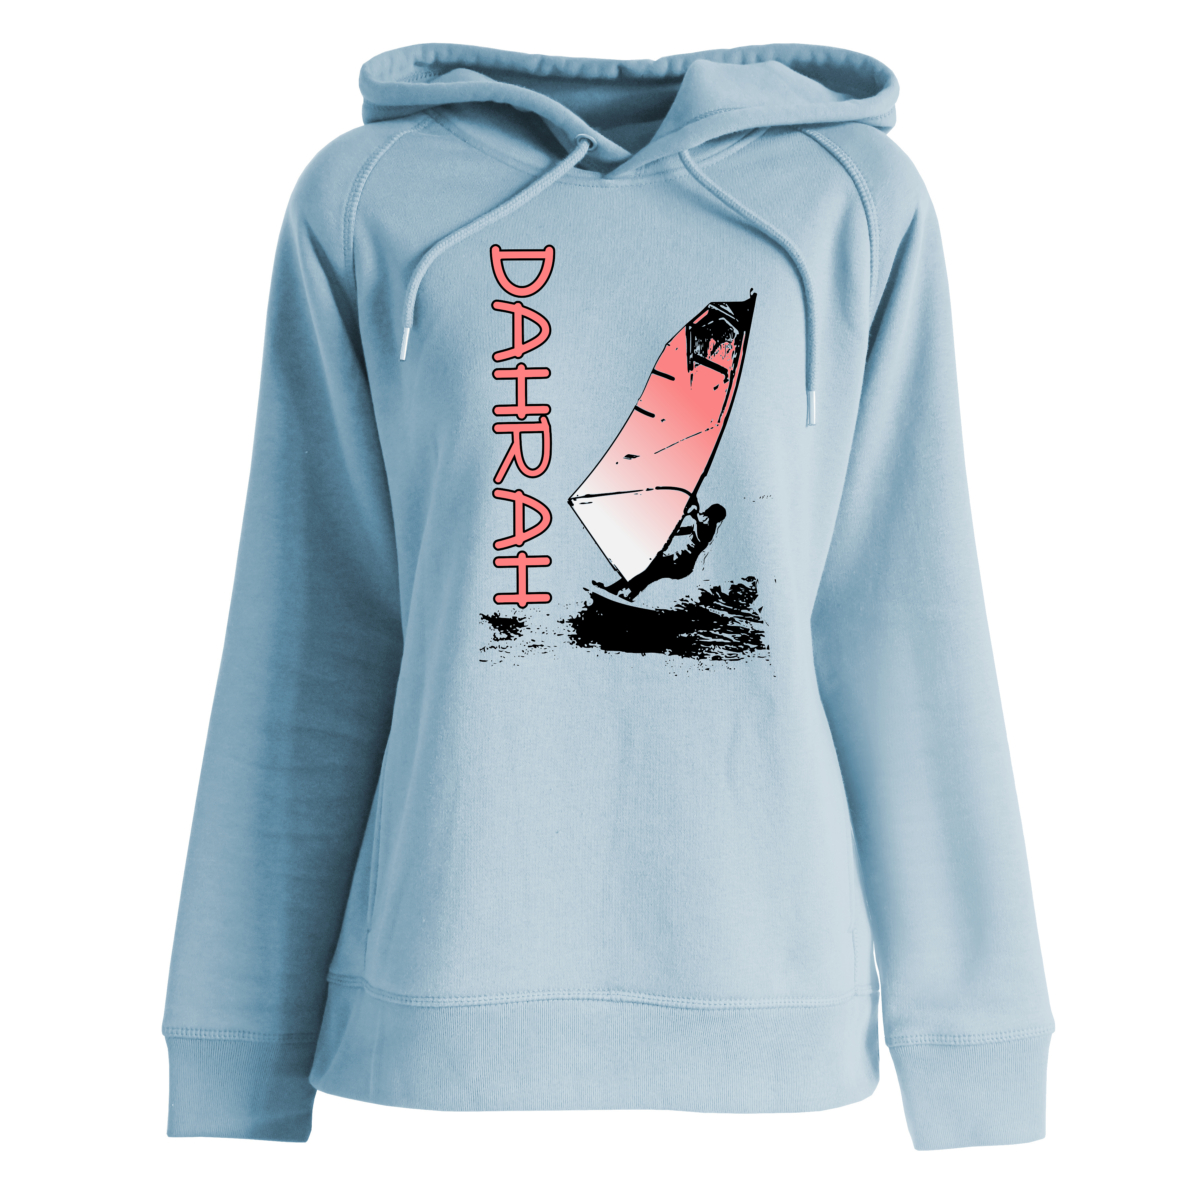 Dahrah Fashion unisex hoodie with print oF A windsurfing girl.